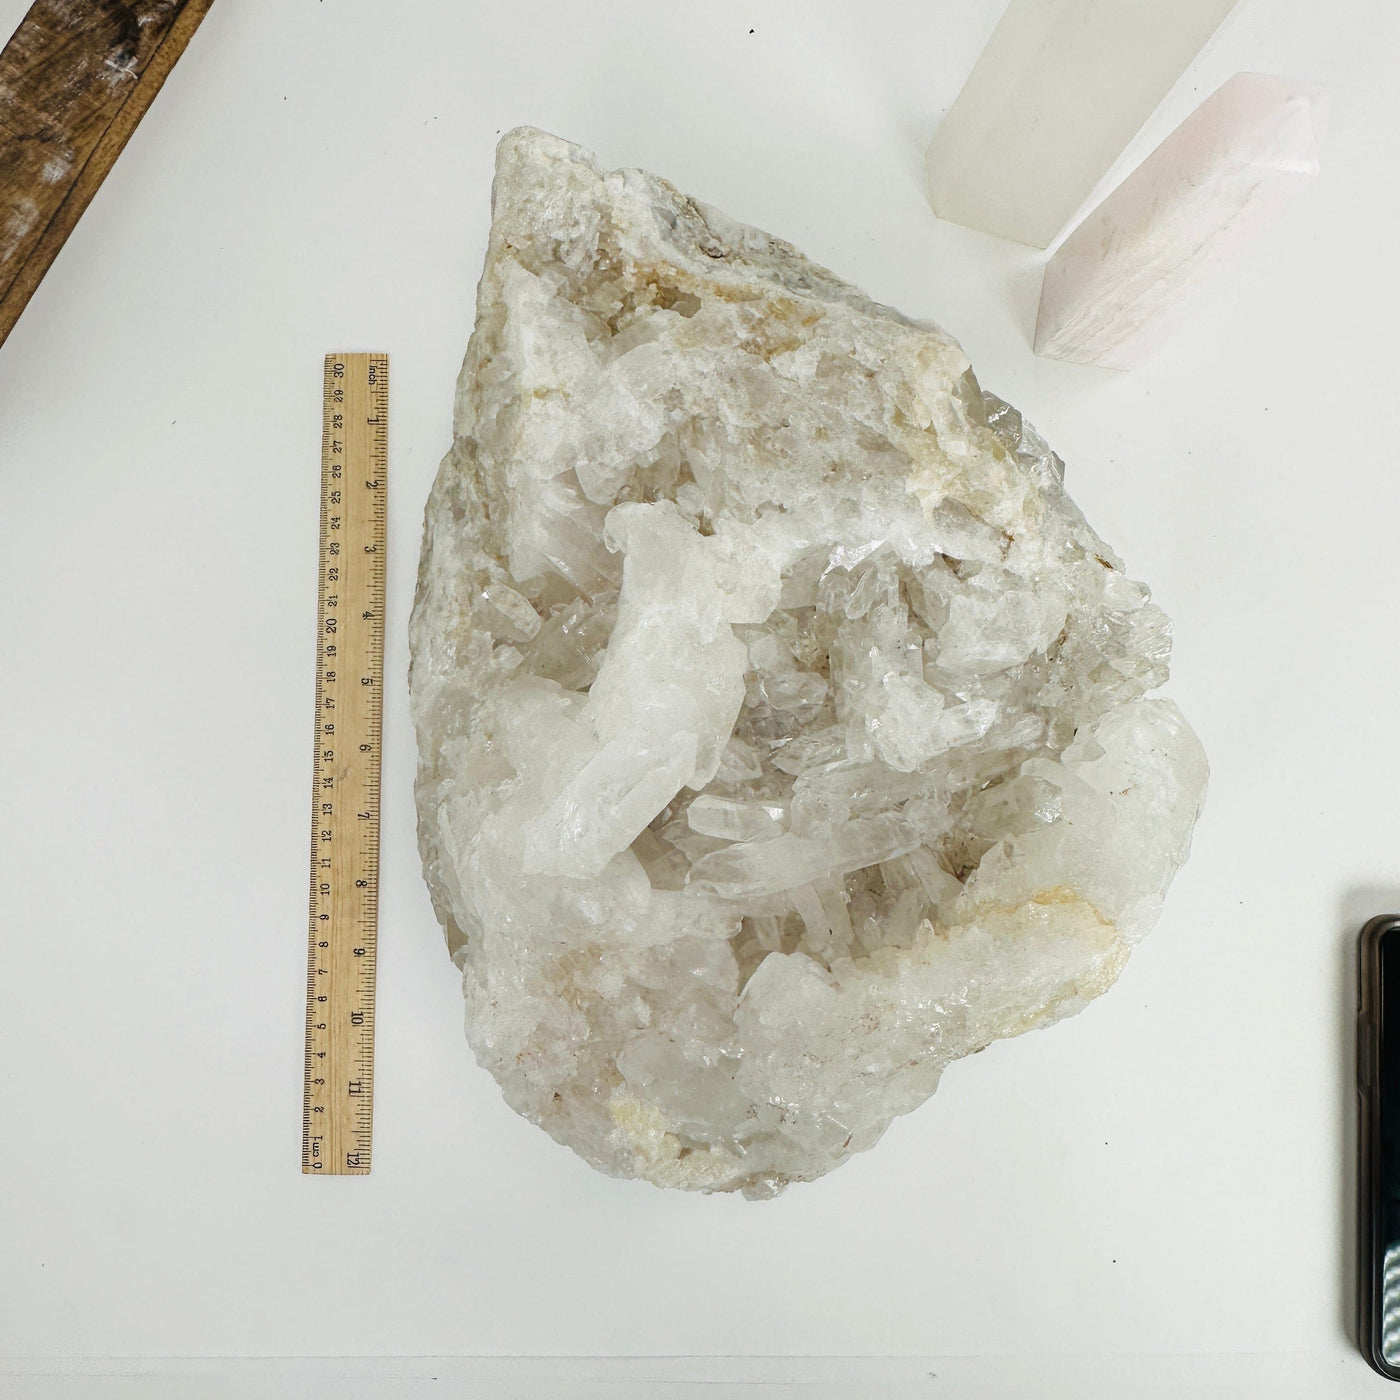 Crystal Quartz Crystal Rough Stone Large Stone